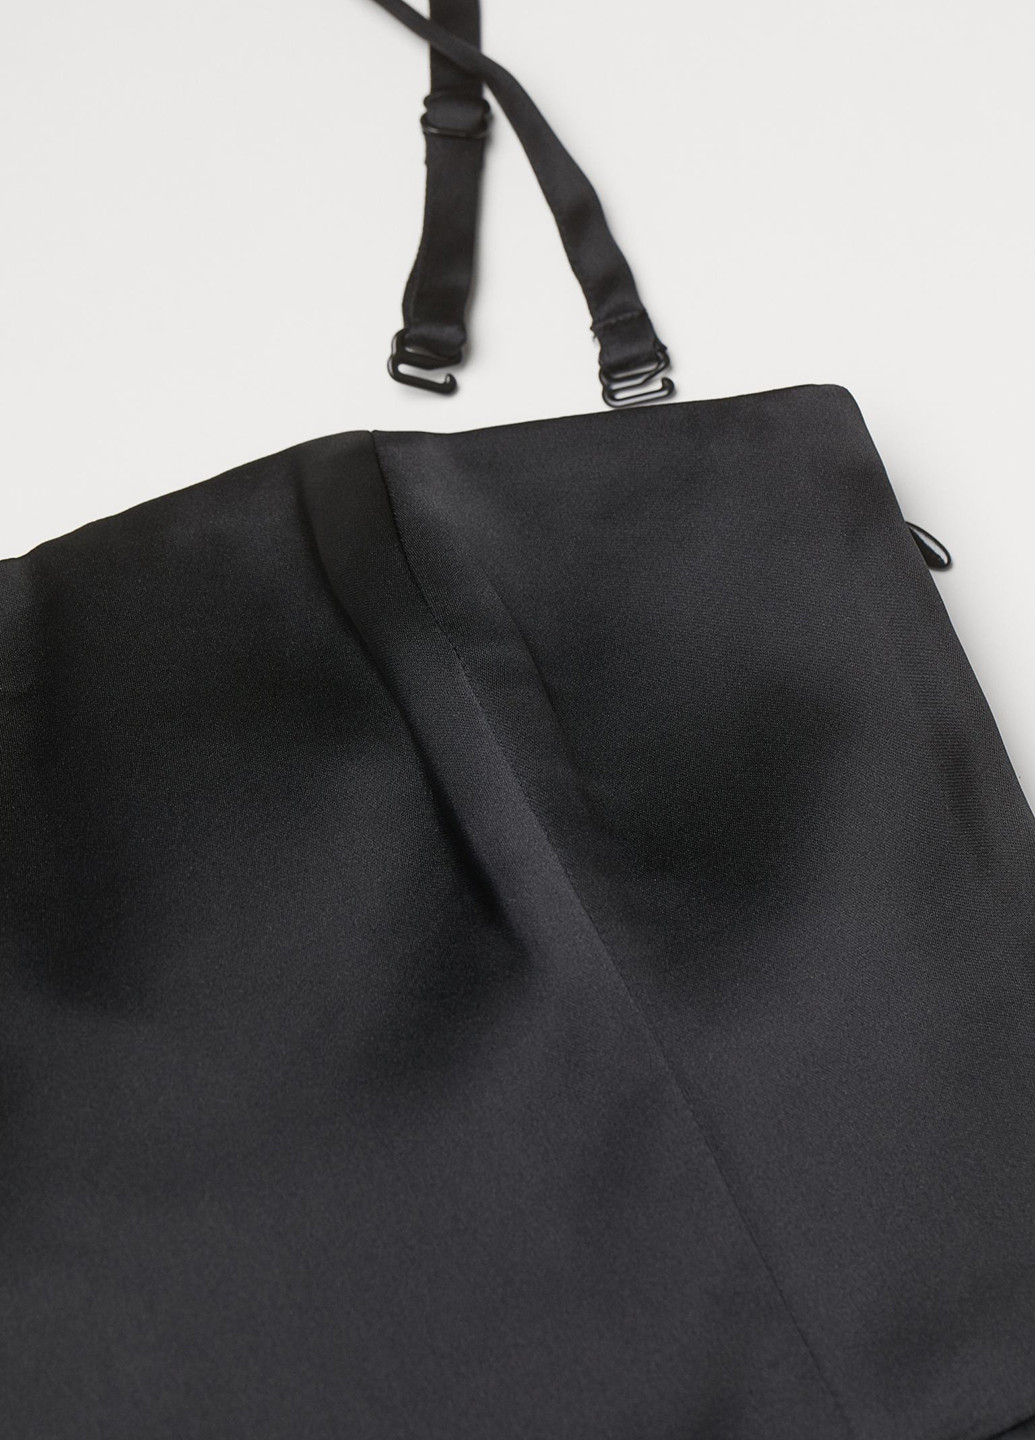 Комбінезон H&M комбинезон-брюки однотонный чёрный кэжуал полиэстер